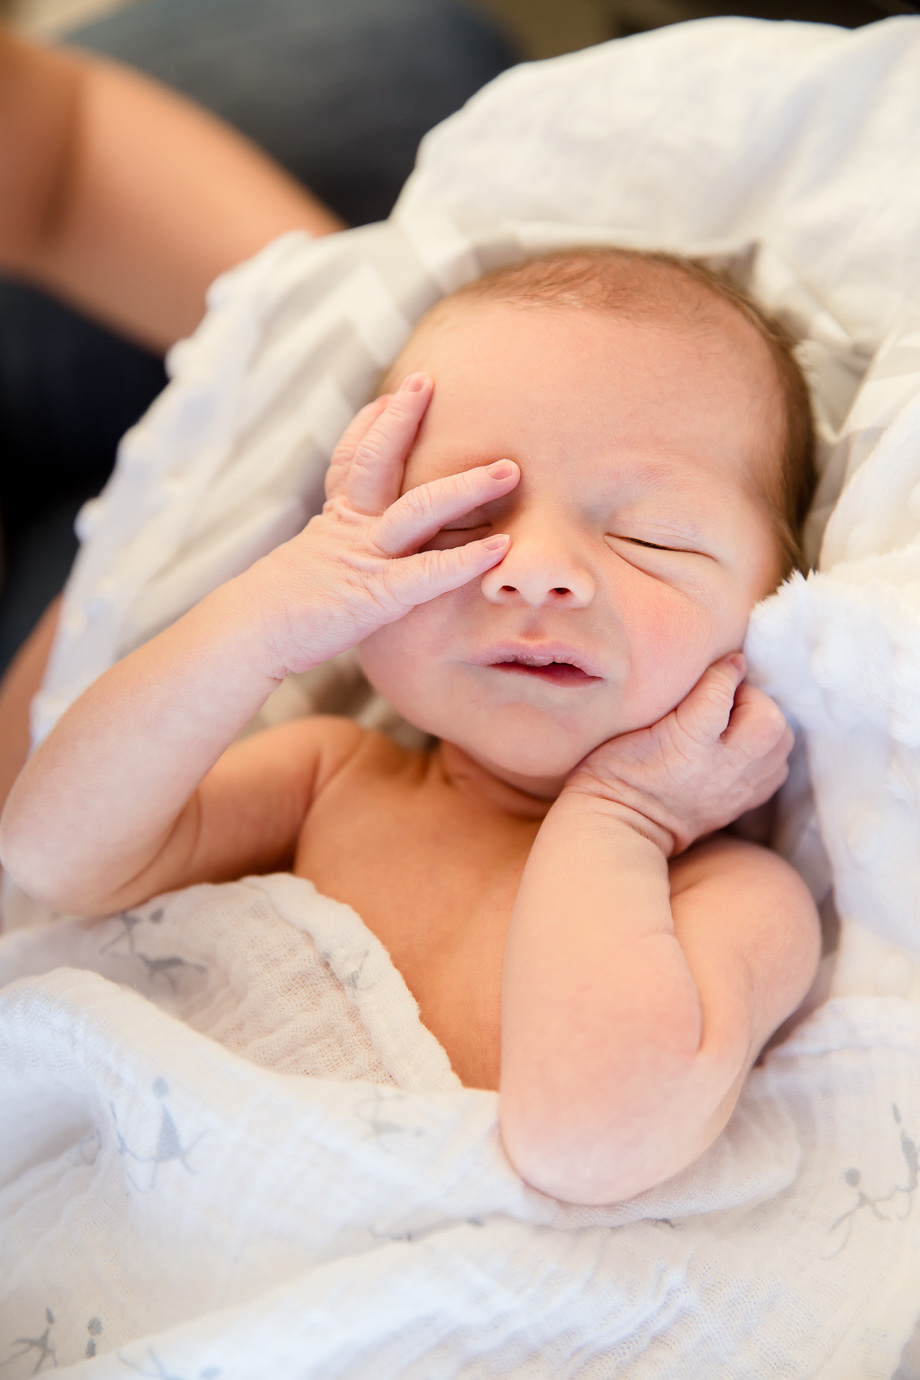 sleepy infant baby rubbing his eyes